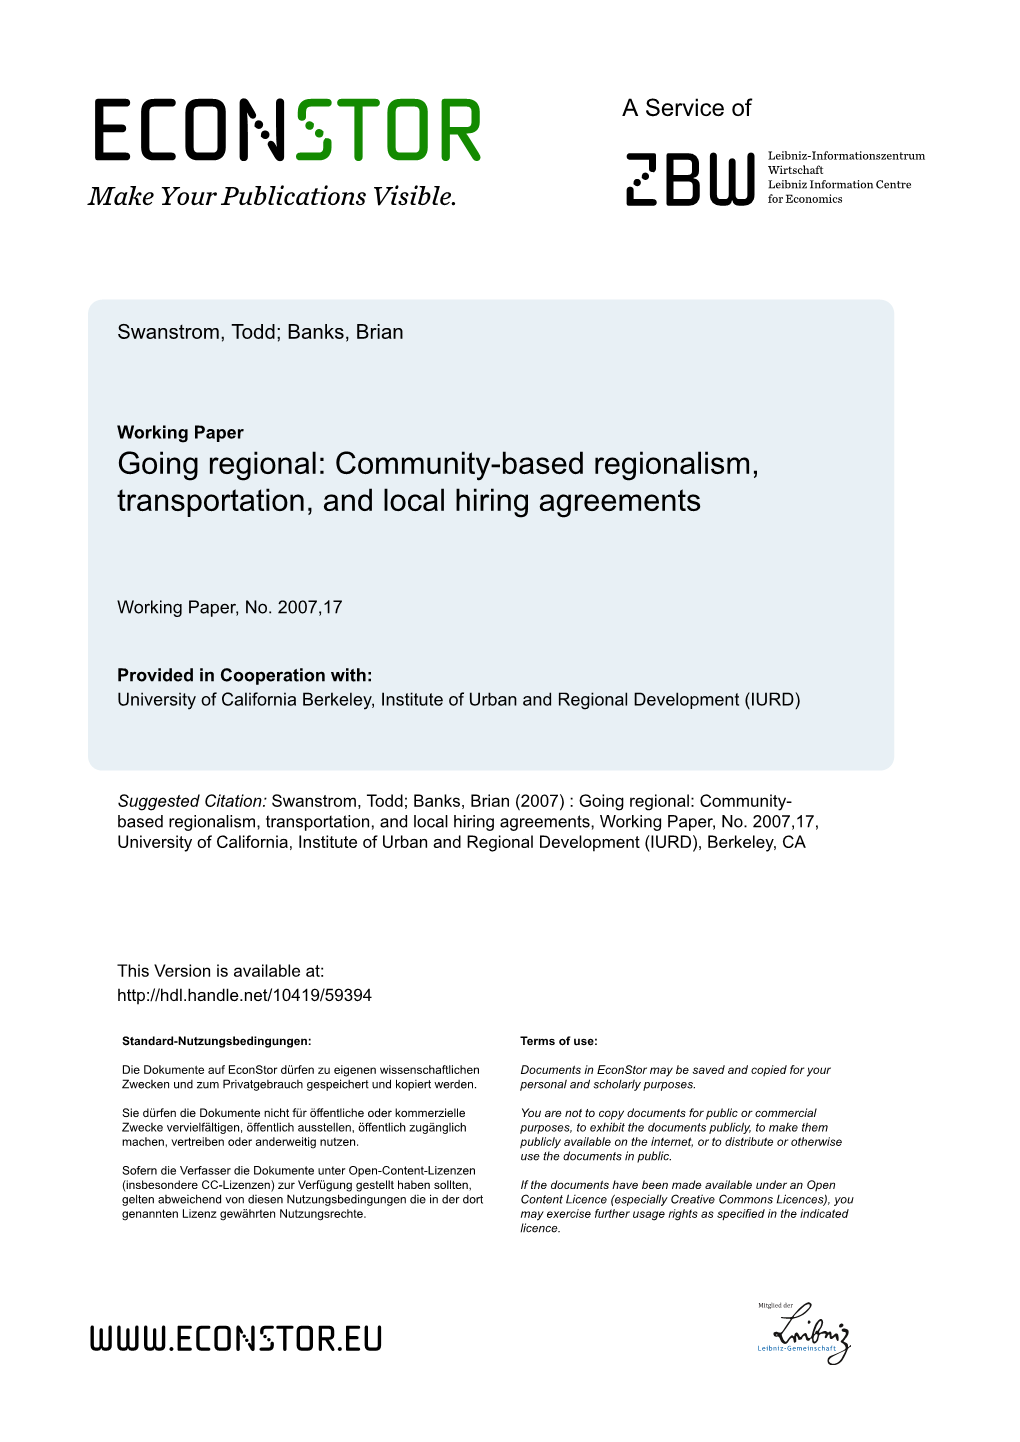 Going Regional: Community-Based Regionalism, Transportation, and Local Hiring Agreements